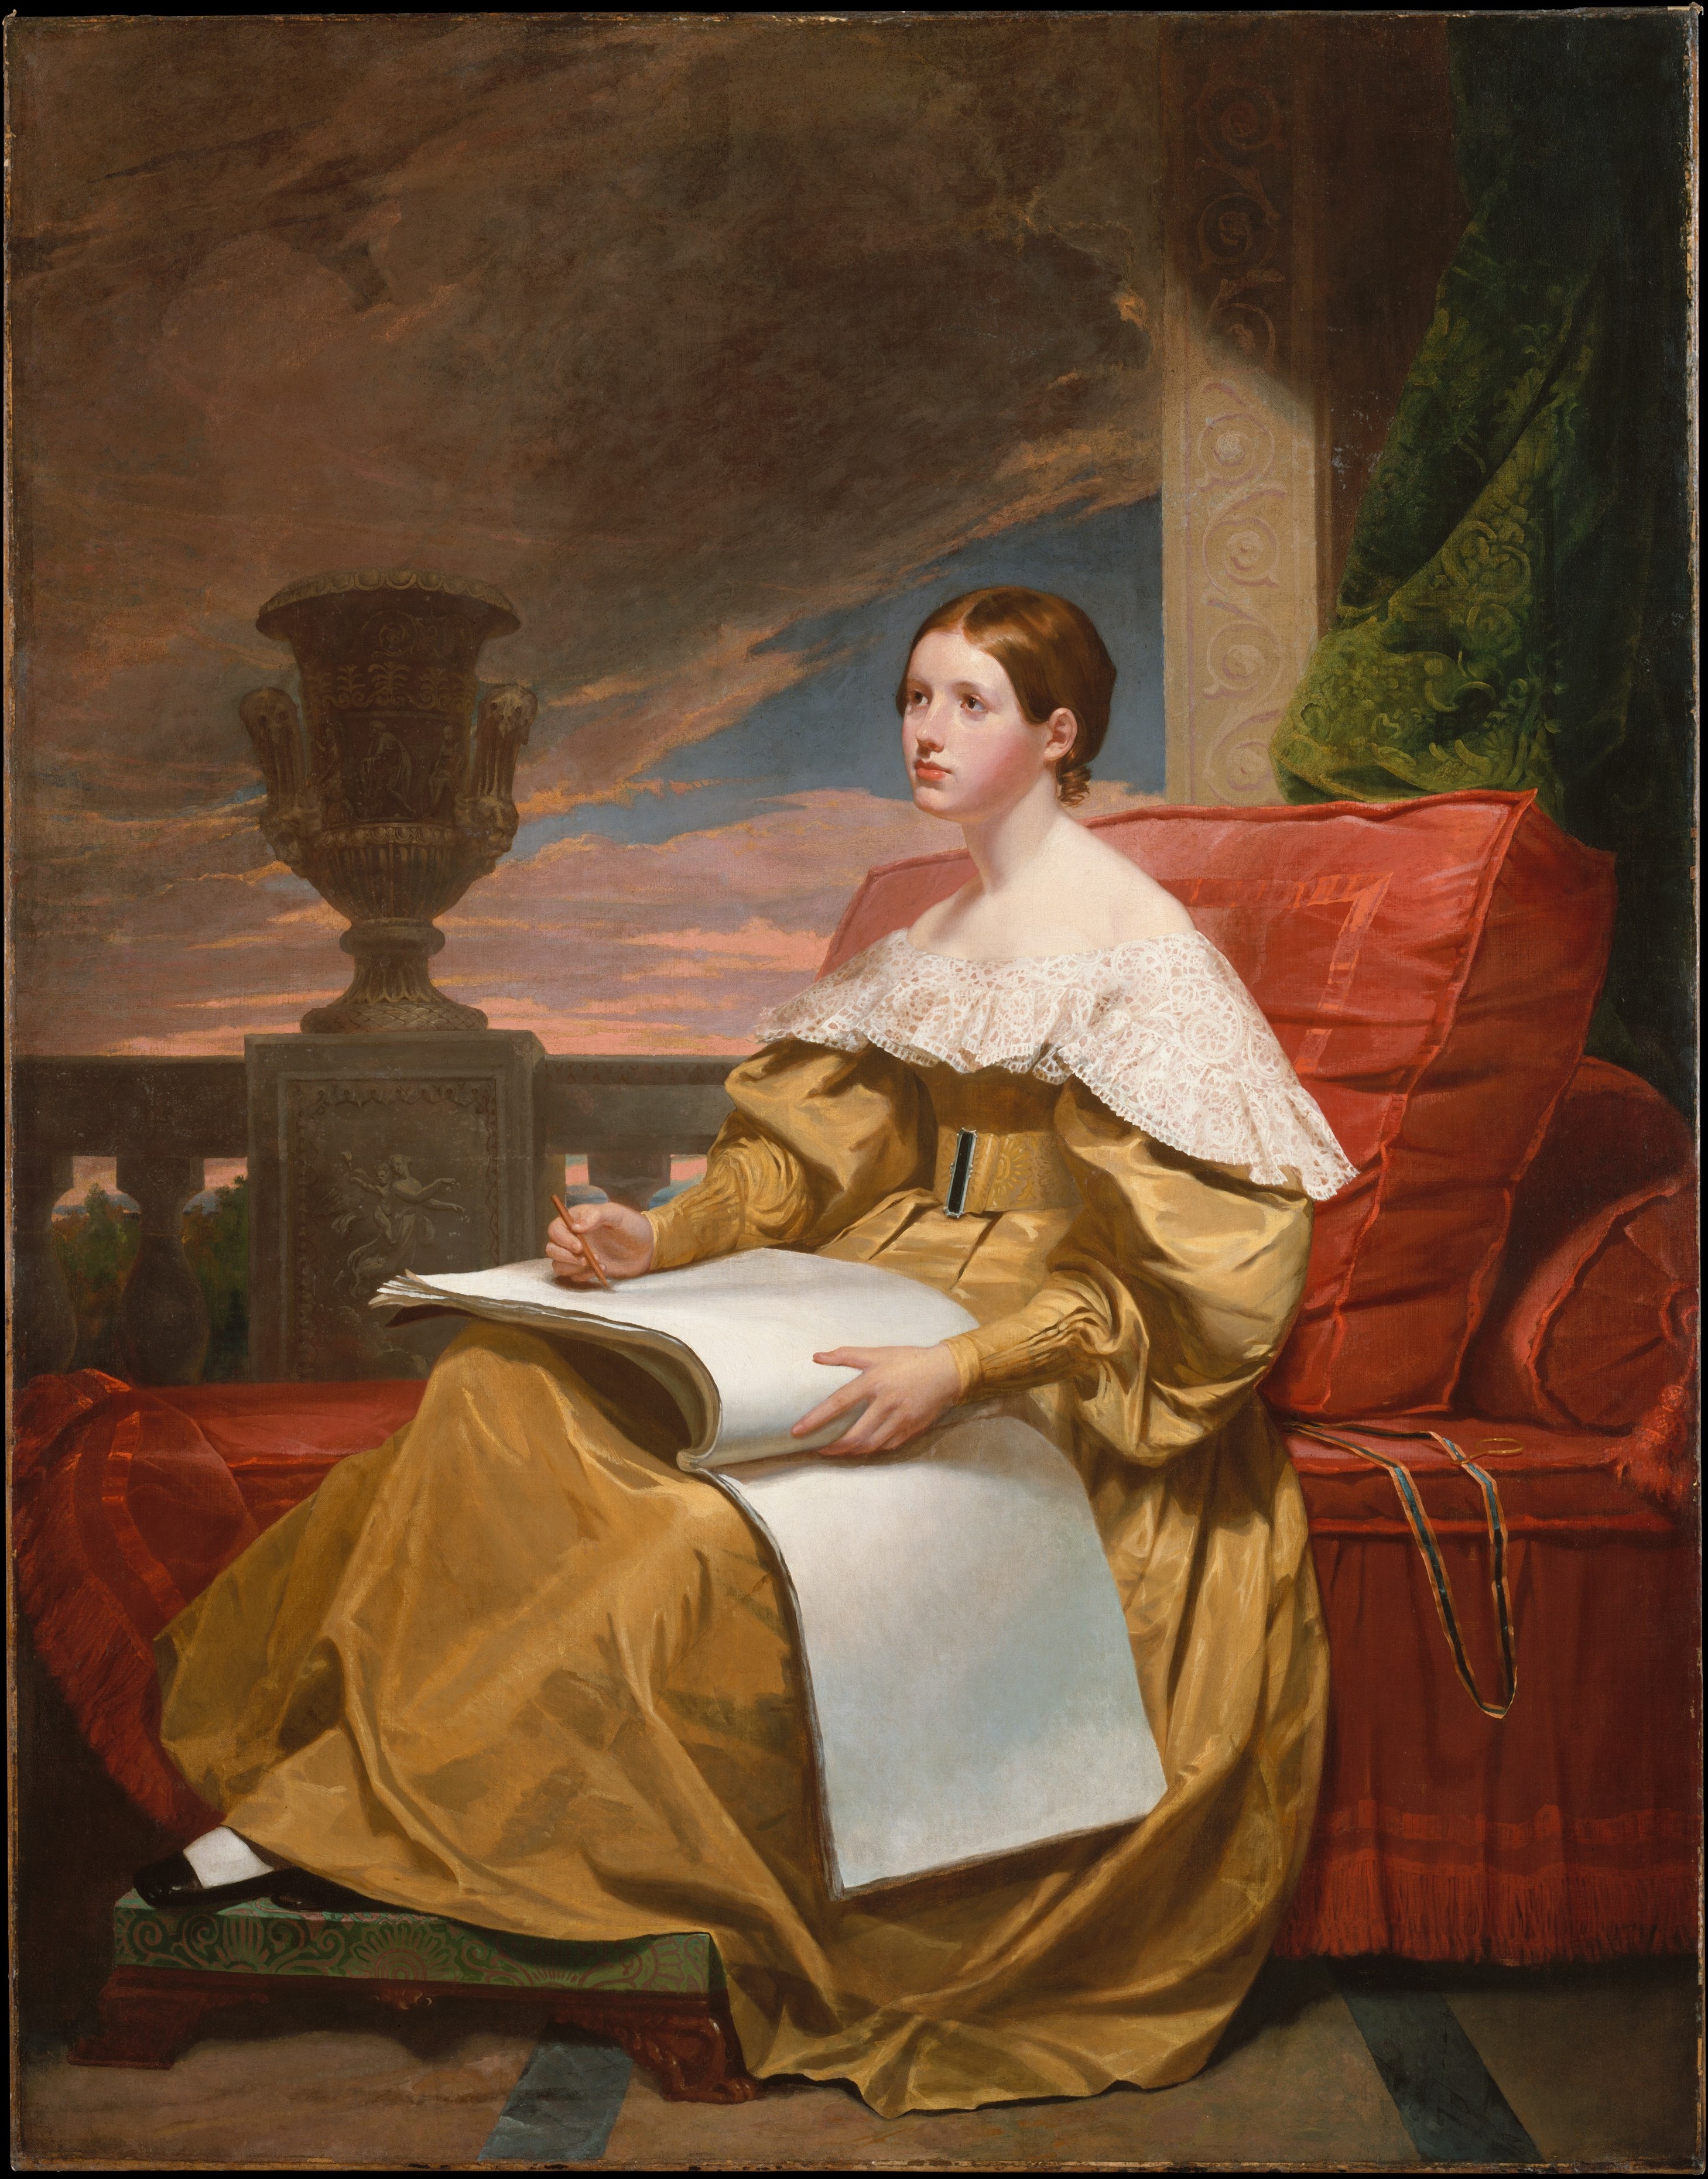 Susan Walker Morse (The Muse) by Samuel F. B. Morse - ca. 1836–37 - 187.3 x 146.4 cm Metropolitan Museum of Art